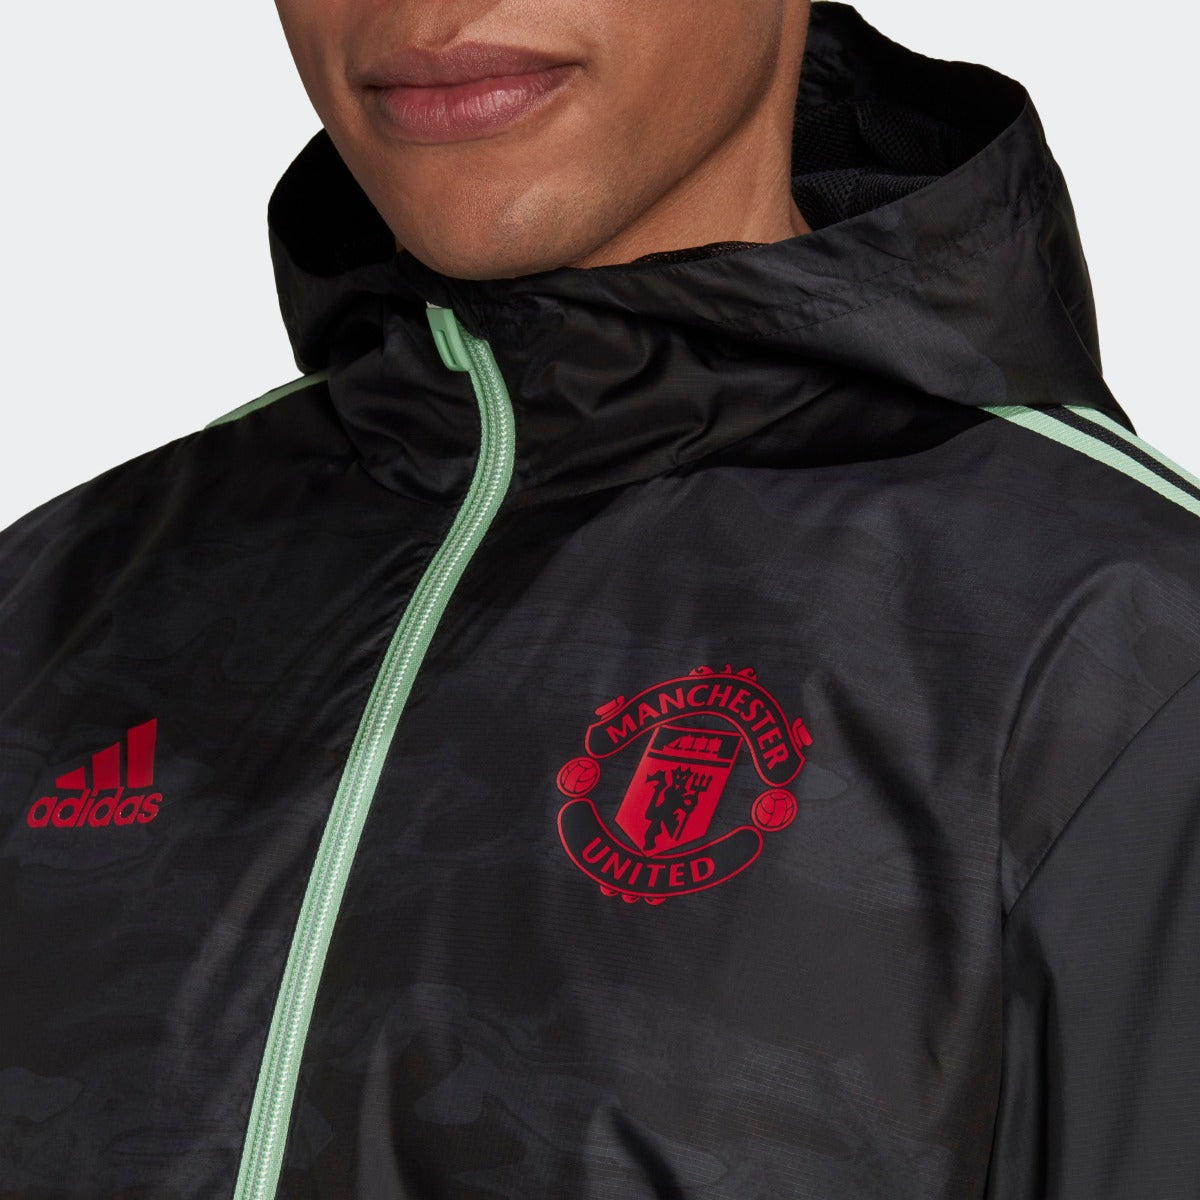 Adidas 2021 Manchester United Windbreaker Jacket - Black (Detail 1)